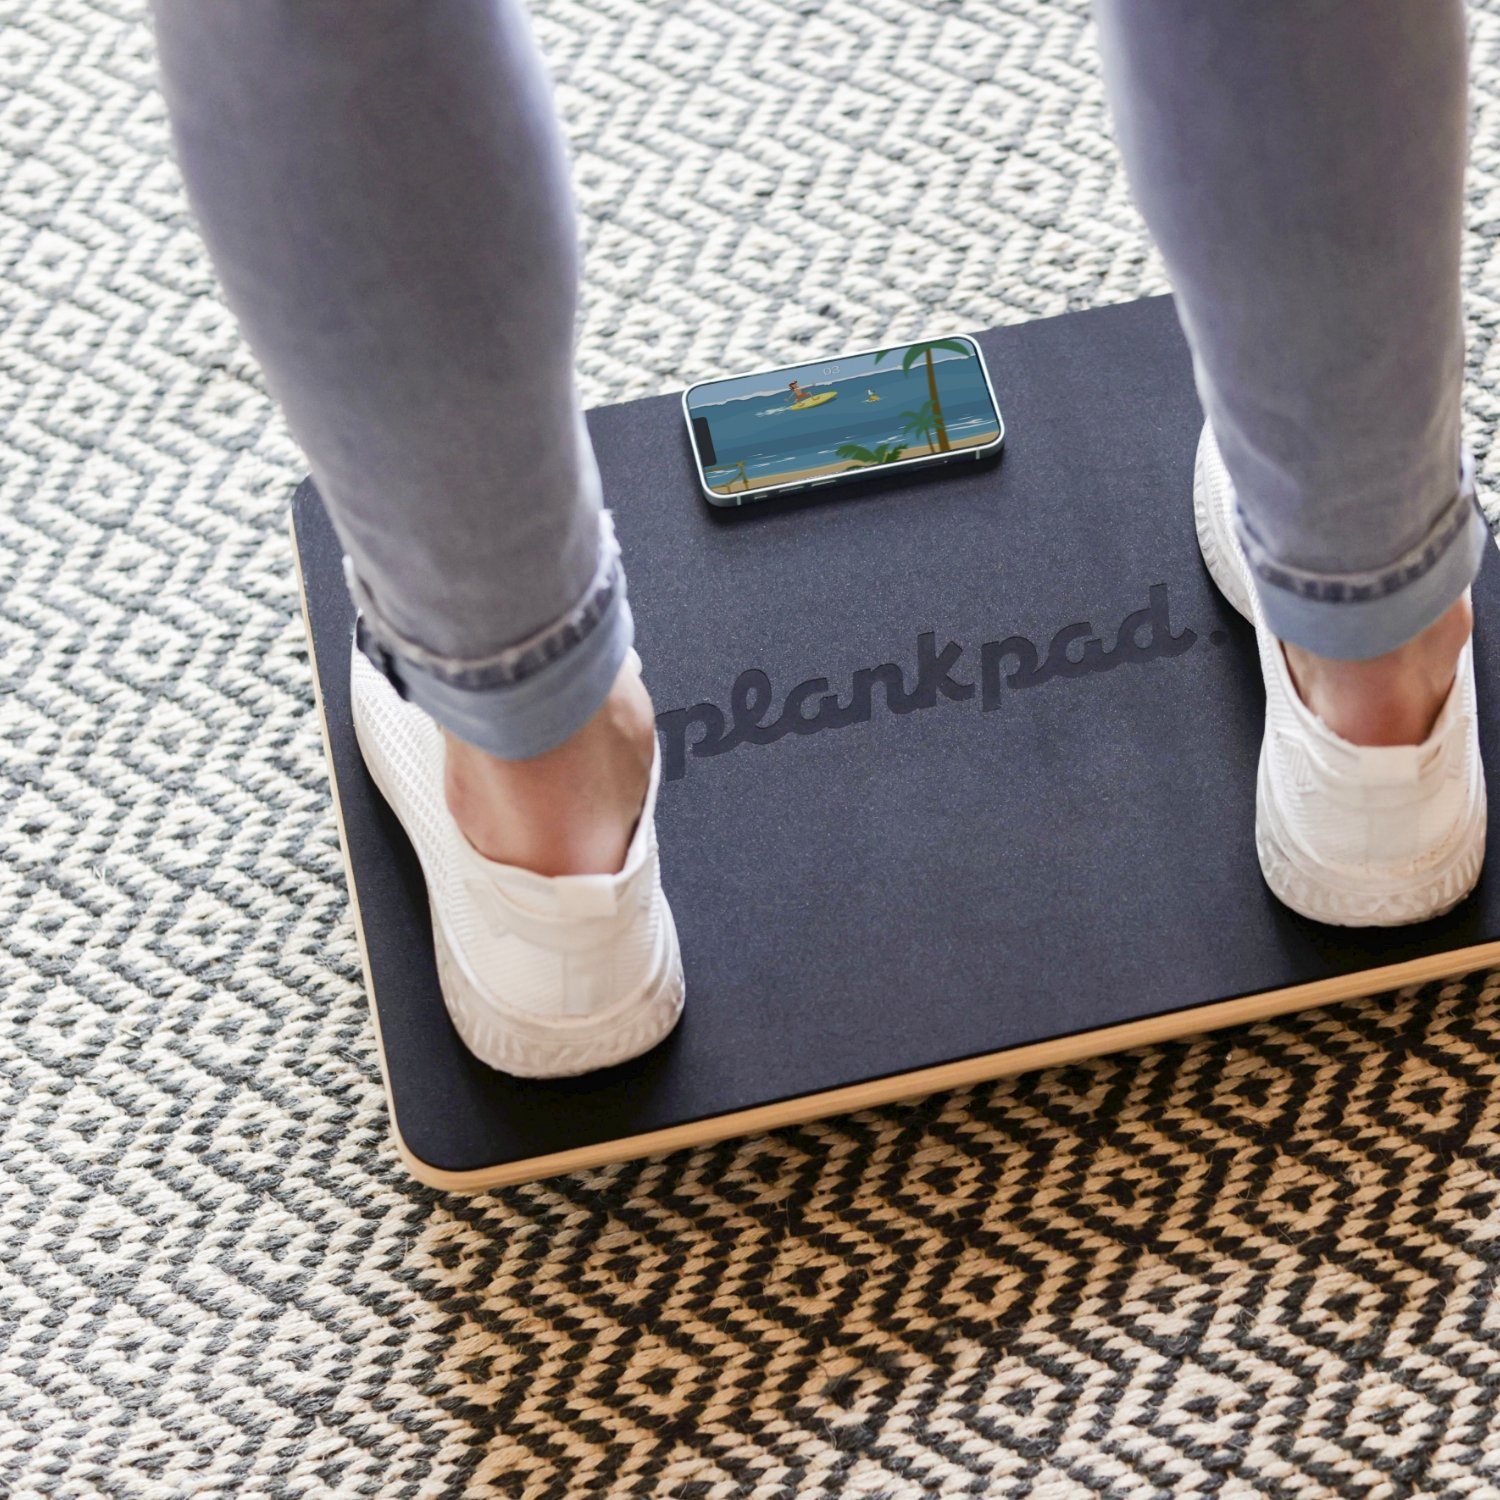 plankpad Balanceboard interaktiver Dein Trainer Ganzkörper PRO, Plankpad